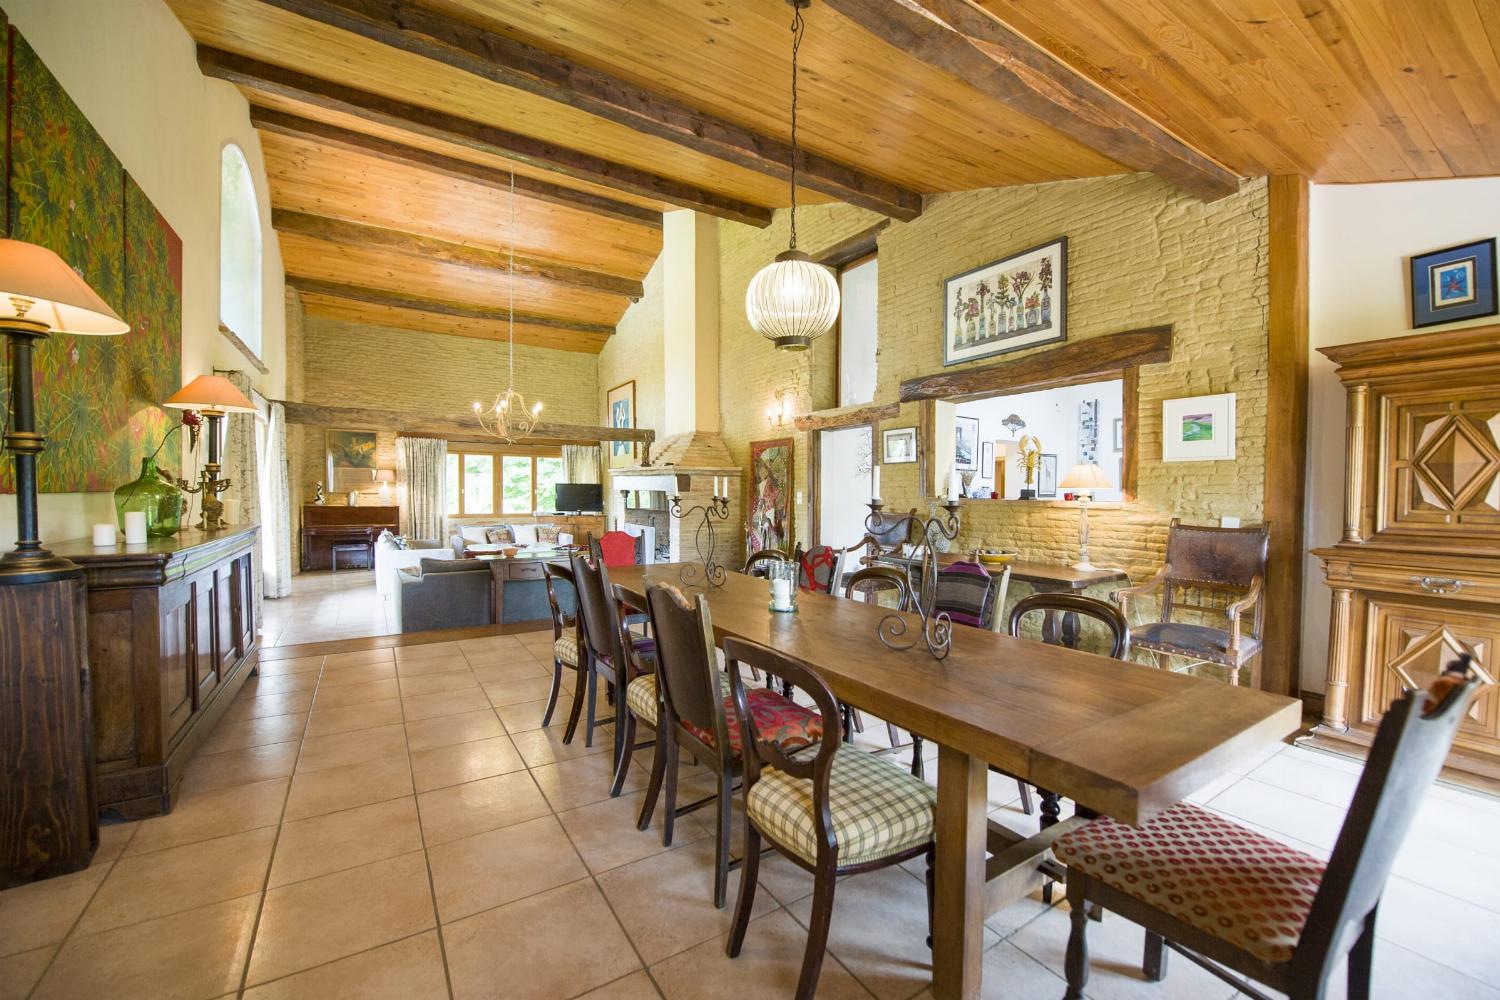 Dining room | Rental home in Haute-Garonne